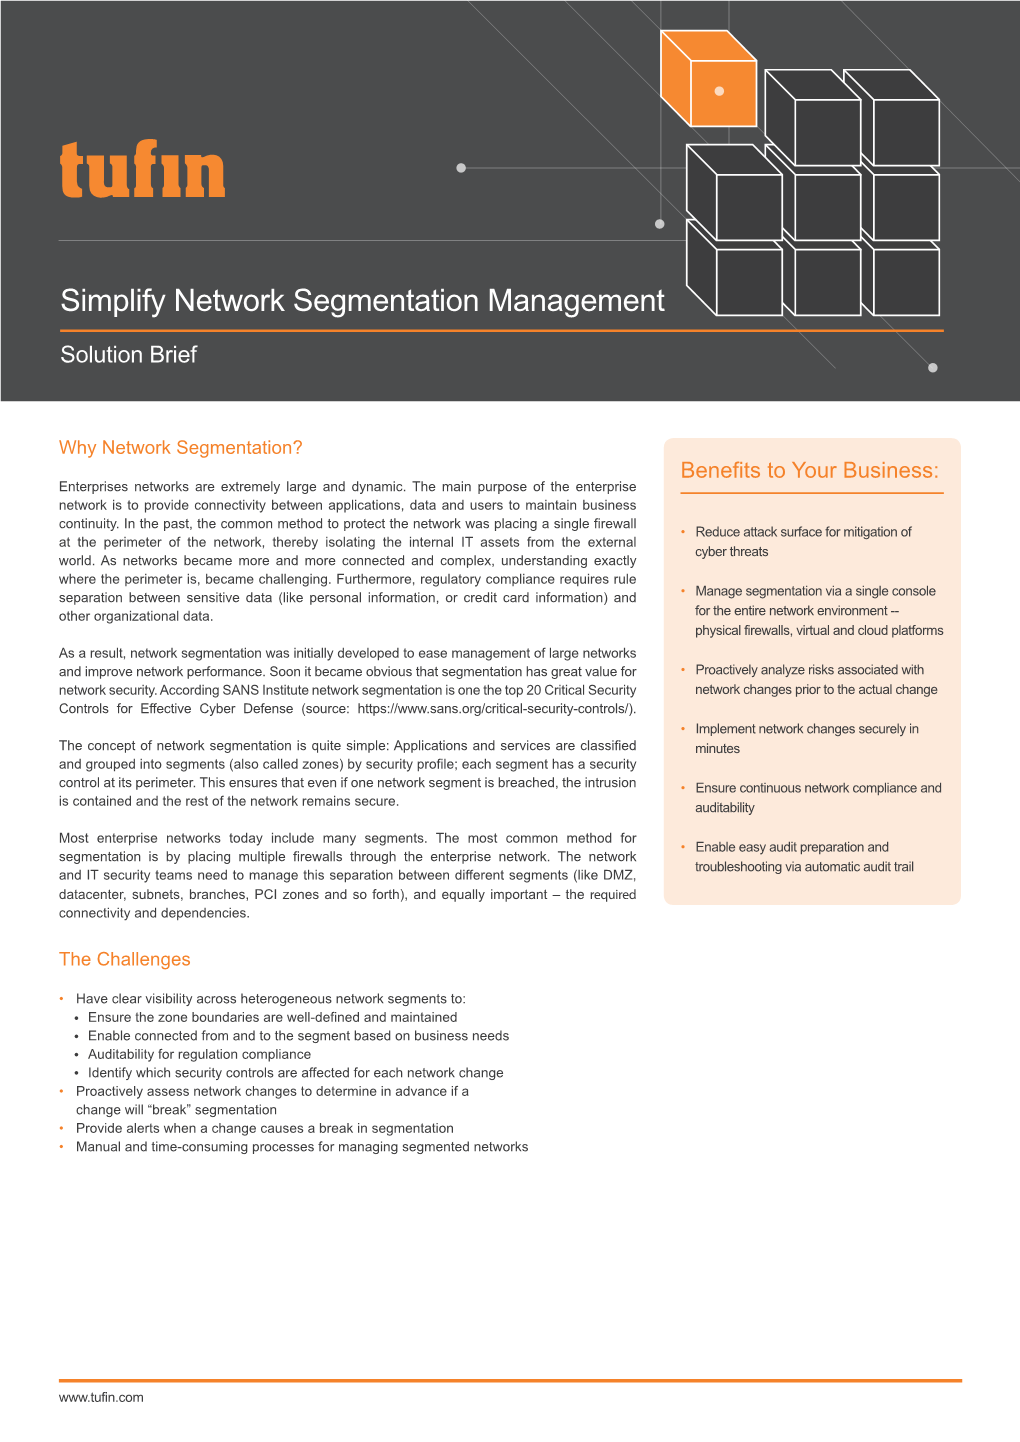 Simplify Network Segmentation Management